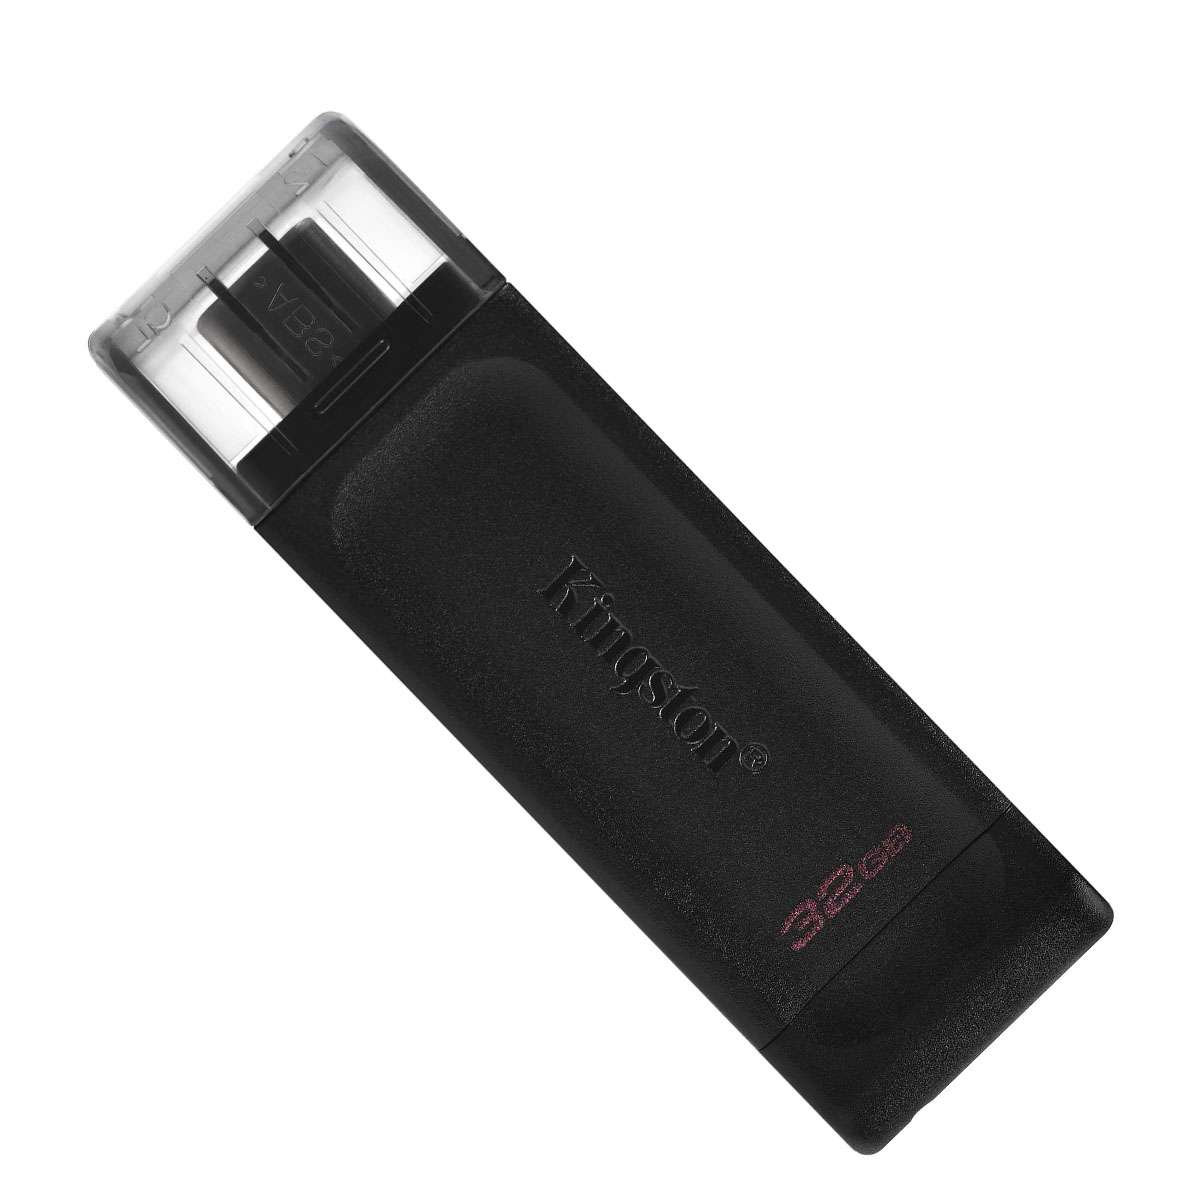 Memoria USB Kingston 32 GB tipo C